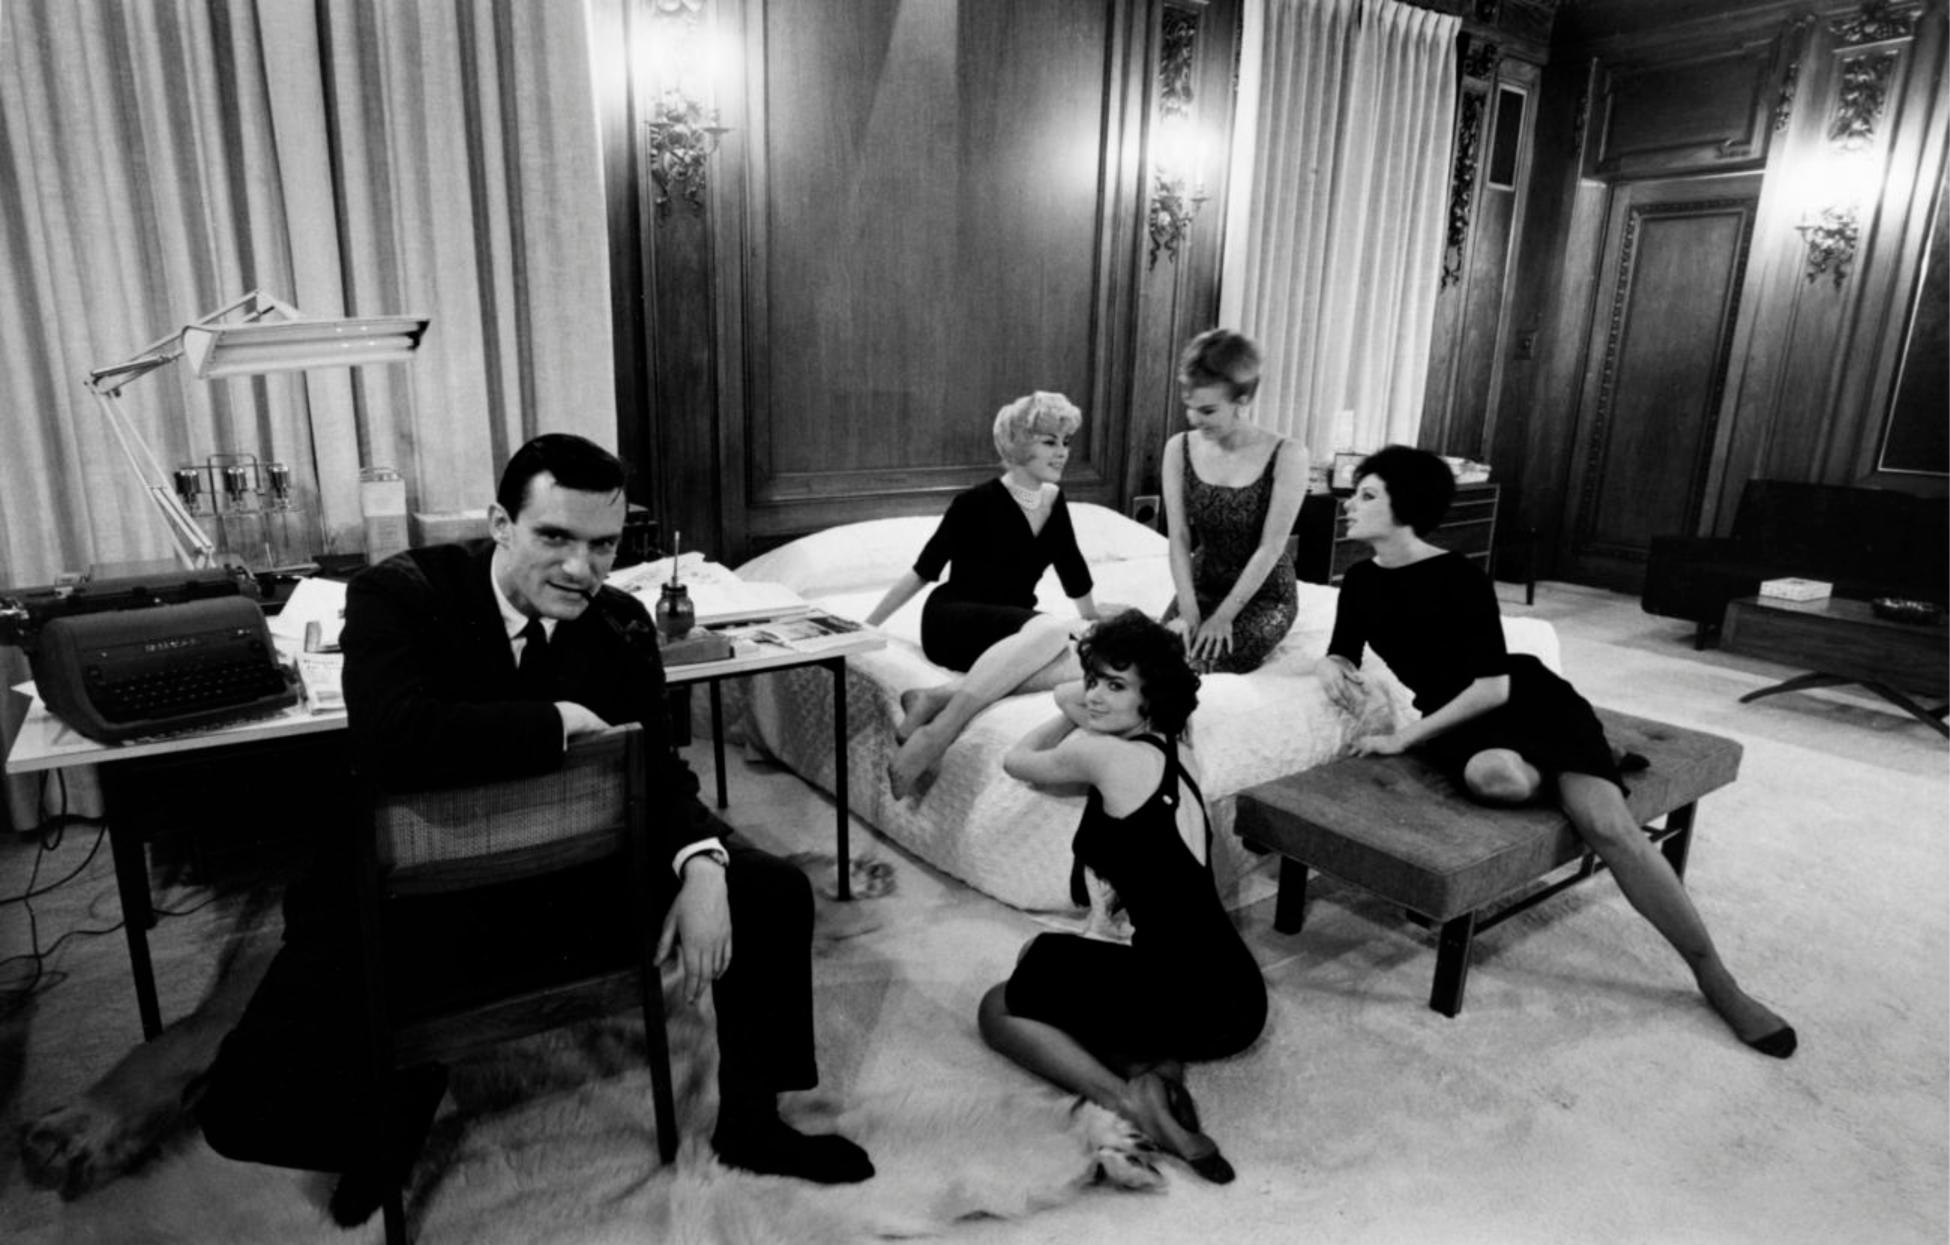 Art Shay Black and White Photograph – Hugh Hefner in His Bedroom Office, Chicago 1961, Schwarz-Weiß-Fotografie